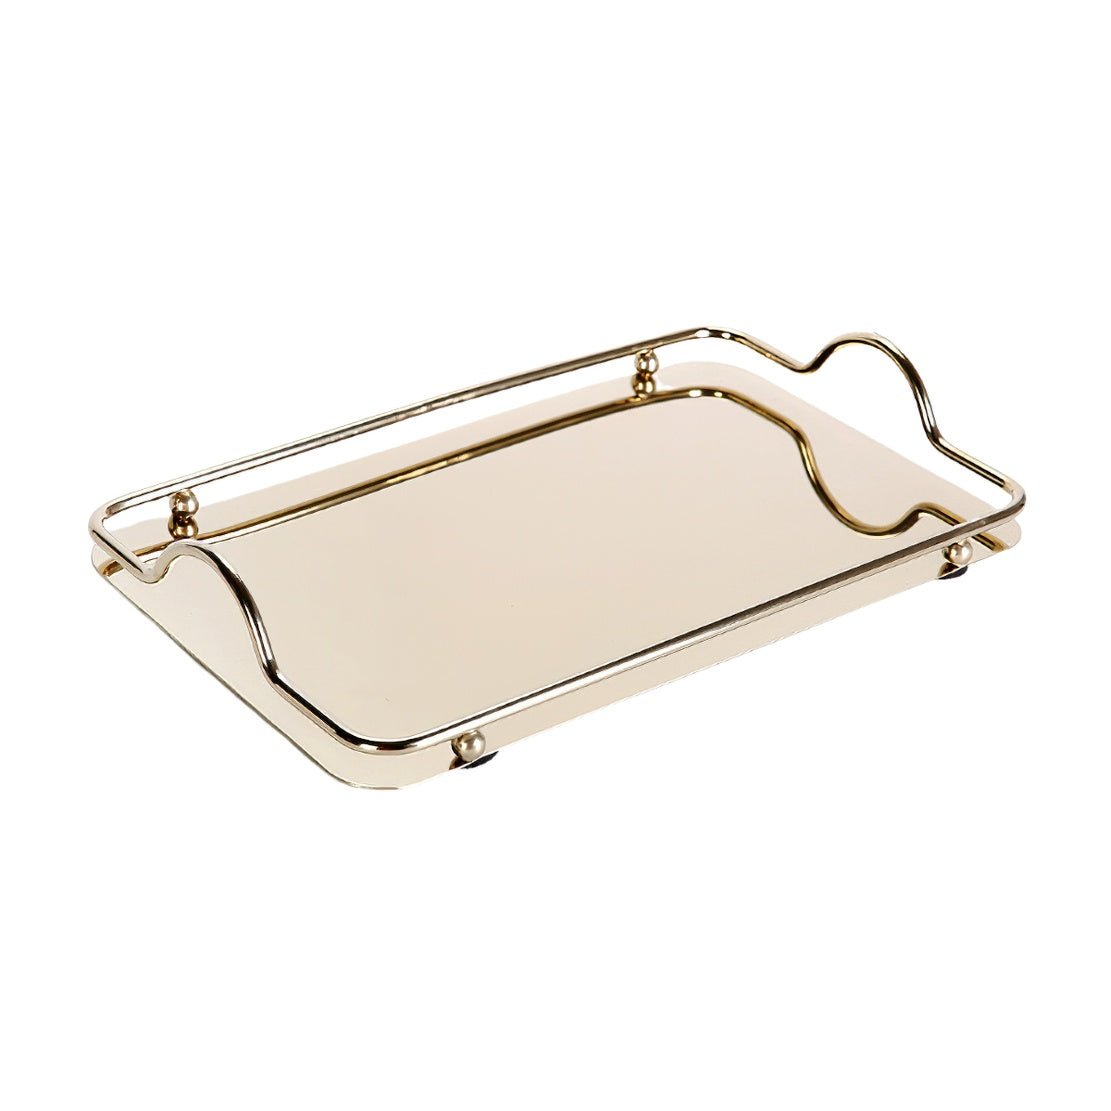 Gold metallic serving tray